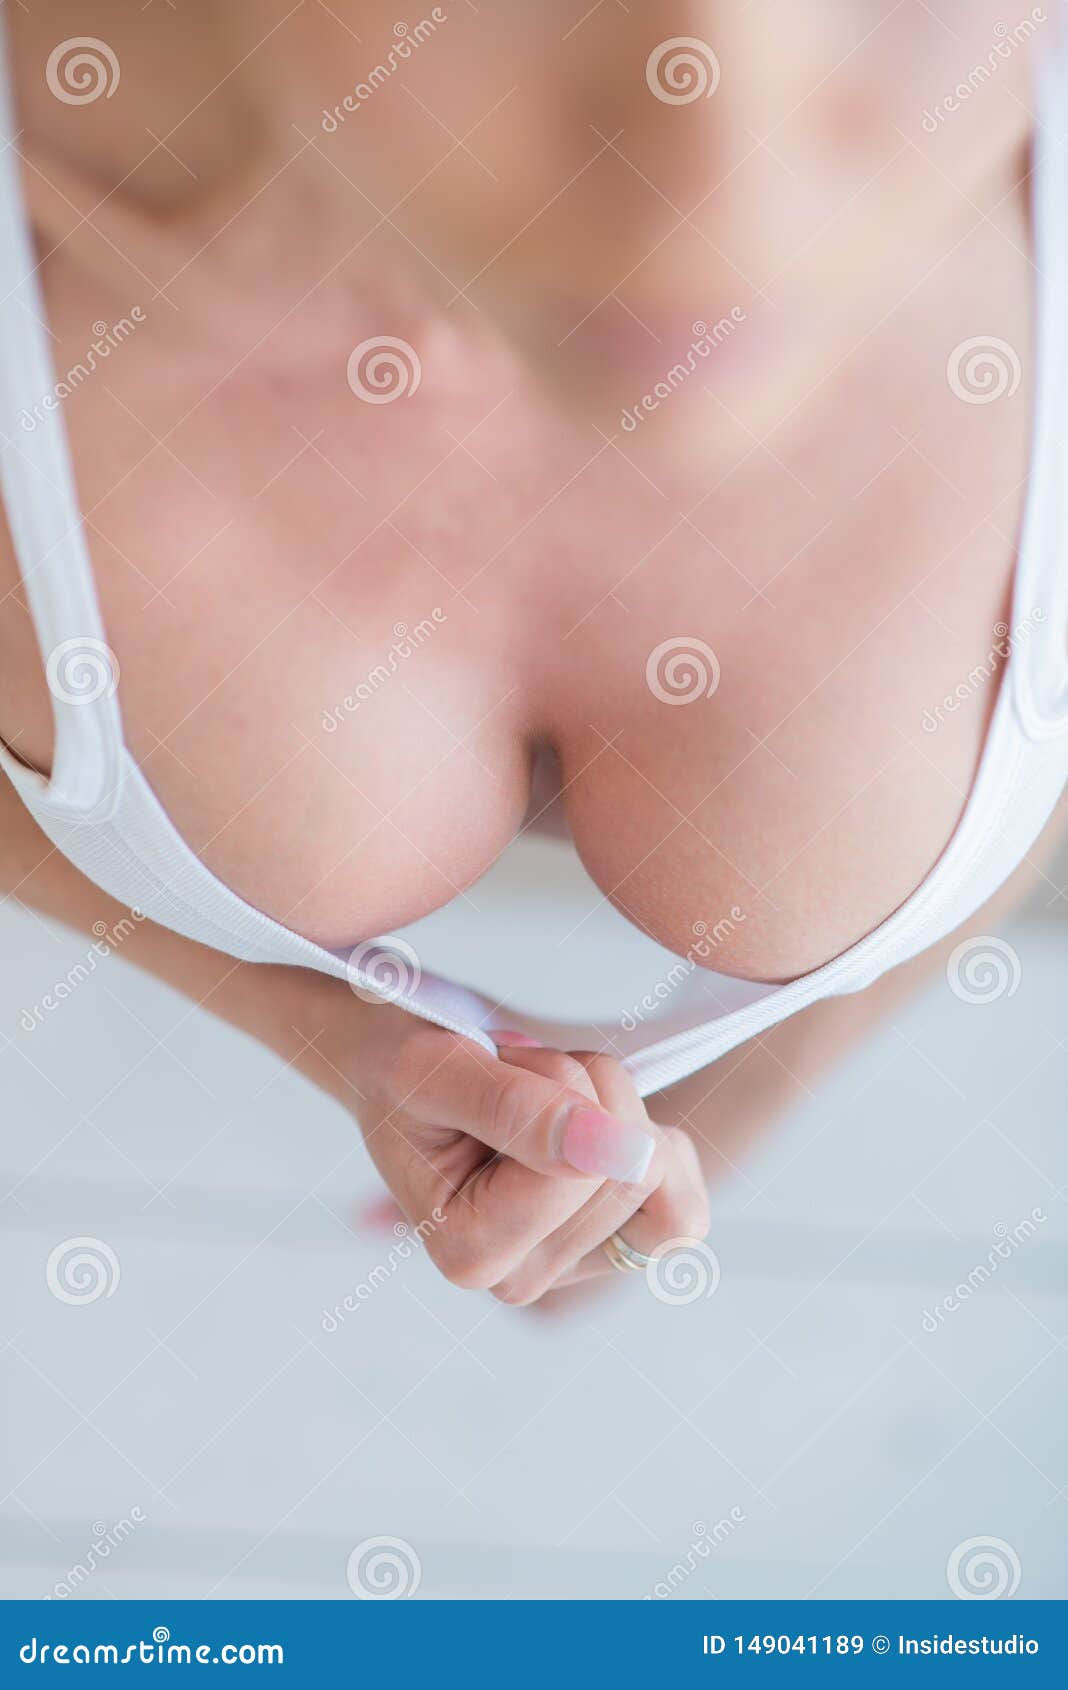 angela jamison add photo big white breast